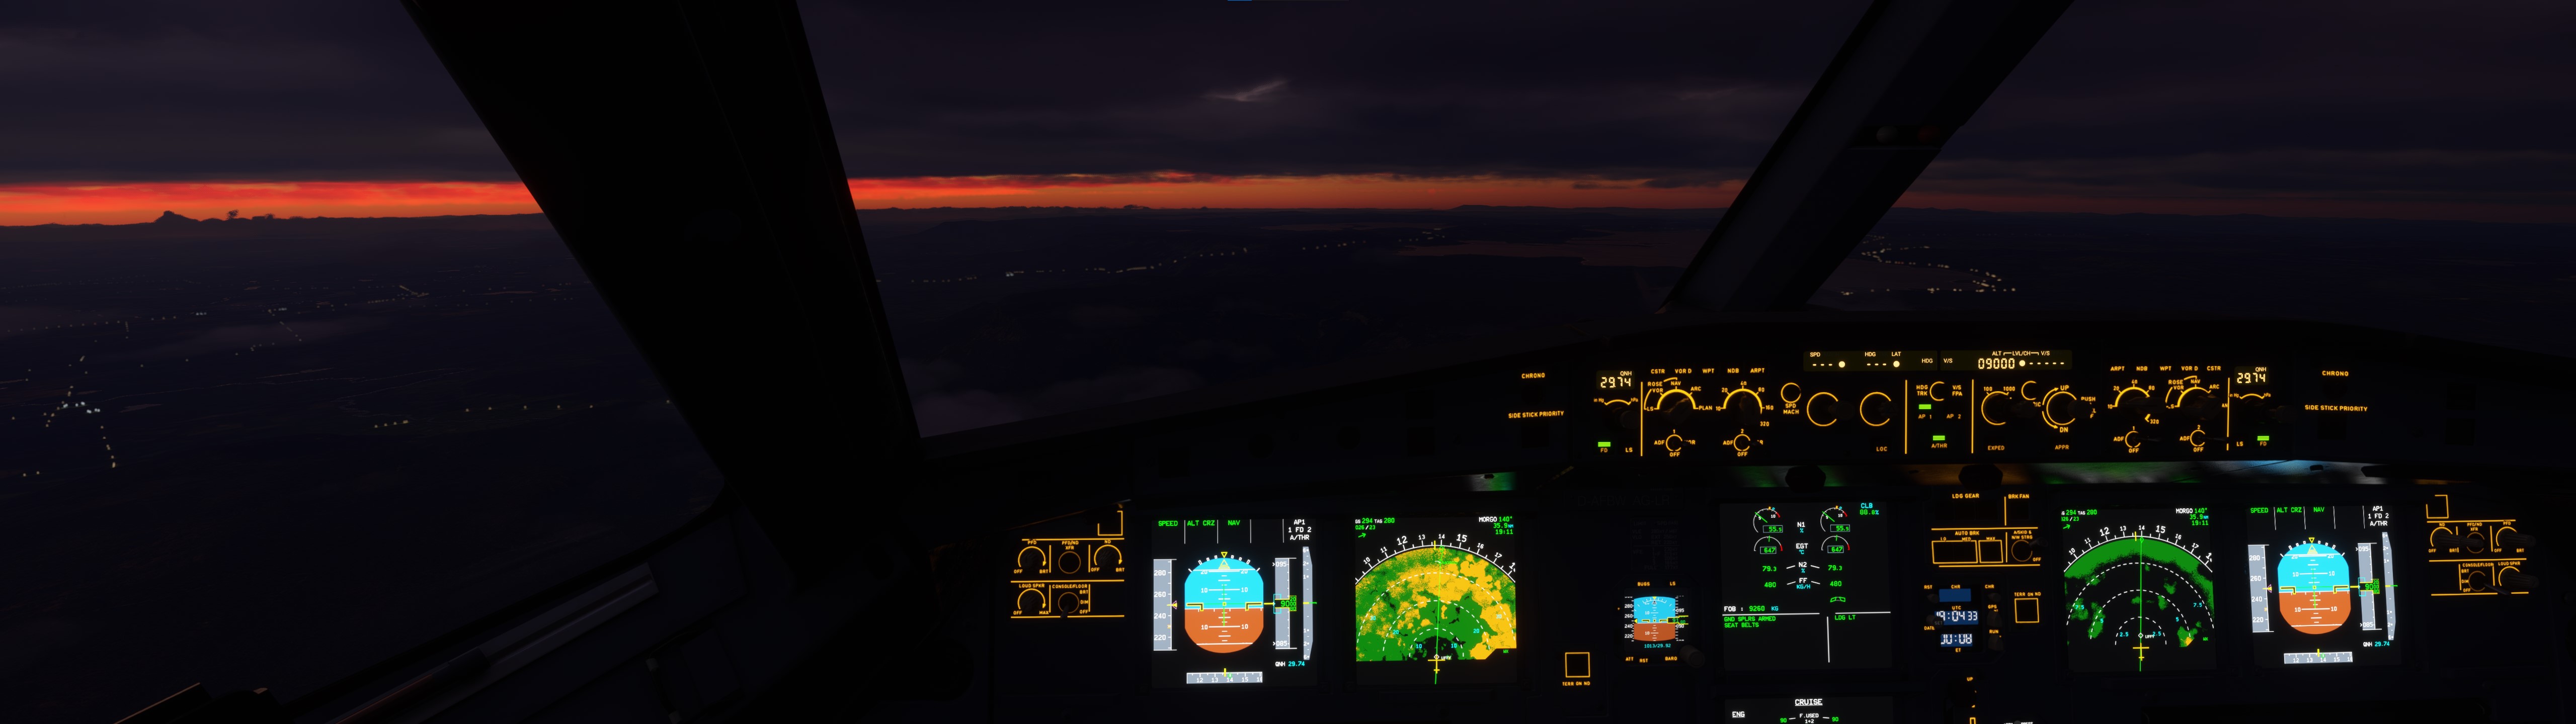 General 5120x1440 flight simulator flying Airbus A320 sky clouds cockpit aircraft airplane PC gaming screen shot passenger aircraft